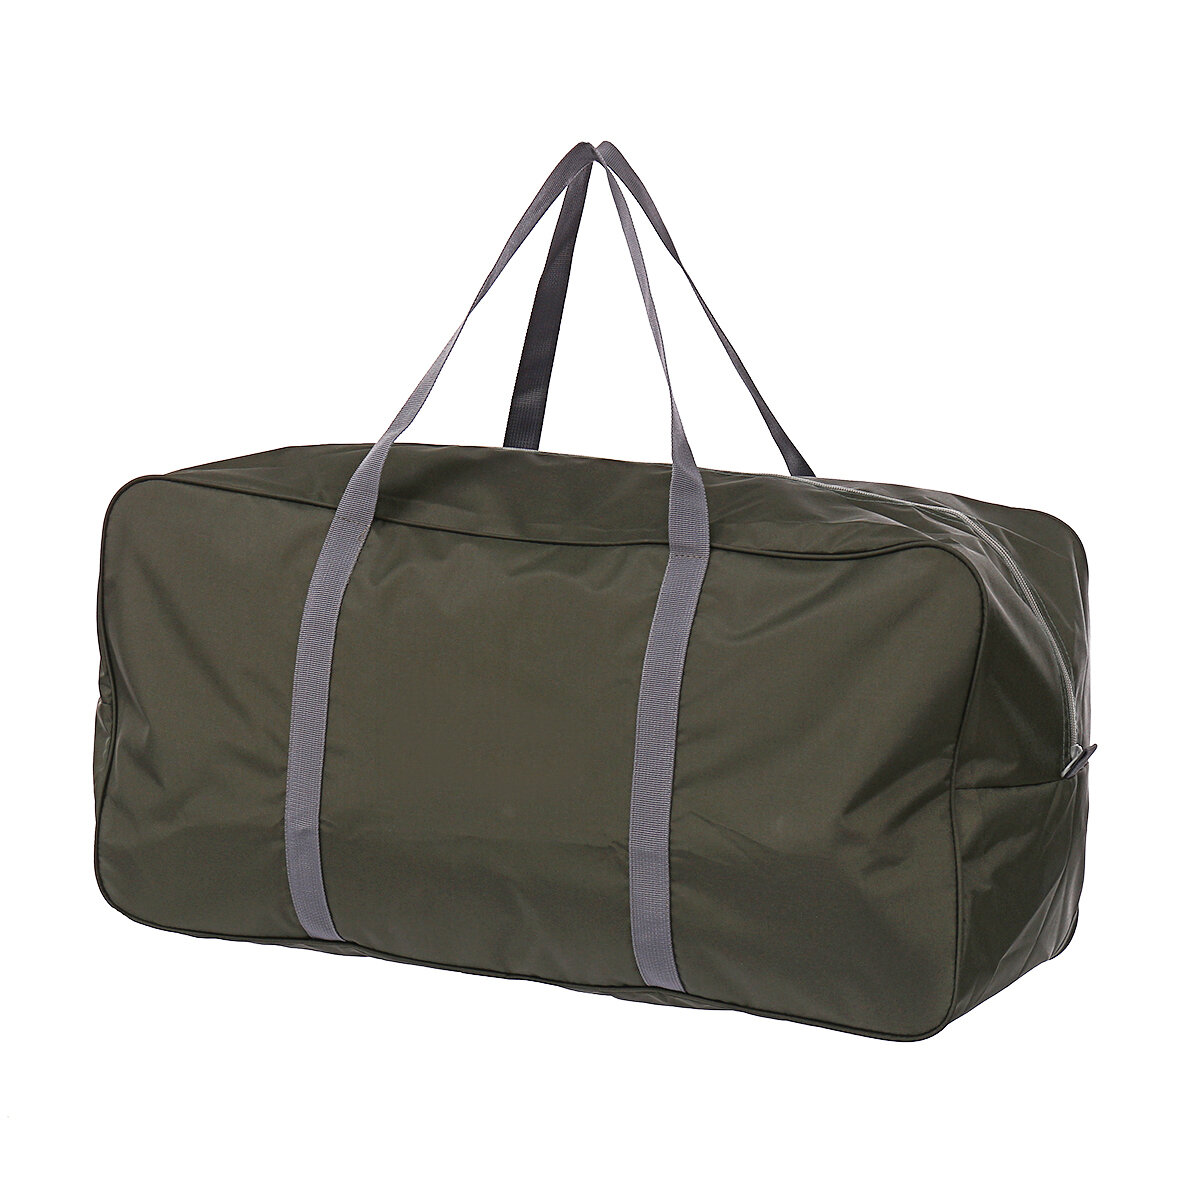 Outdoor-Tasche 45L/21L Oxford Große Duffle Bag Reisen Campingzelte Gepäckaufbewahrung Handtasche Sport Moving Bag Wasserdicht